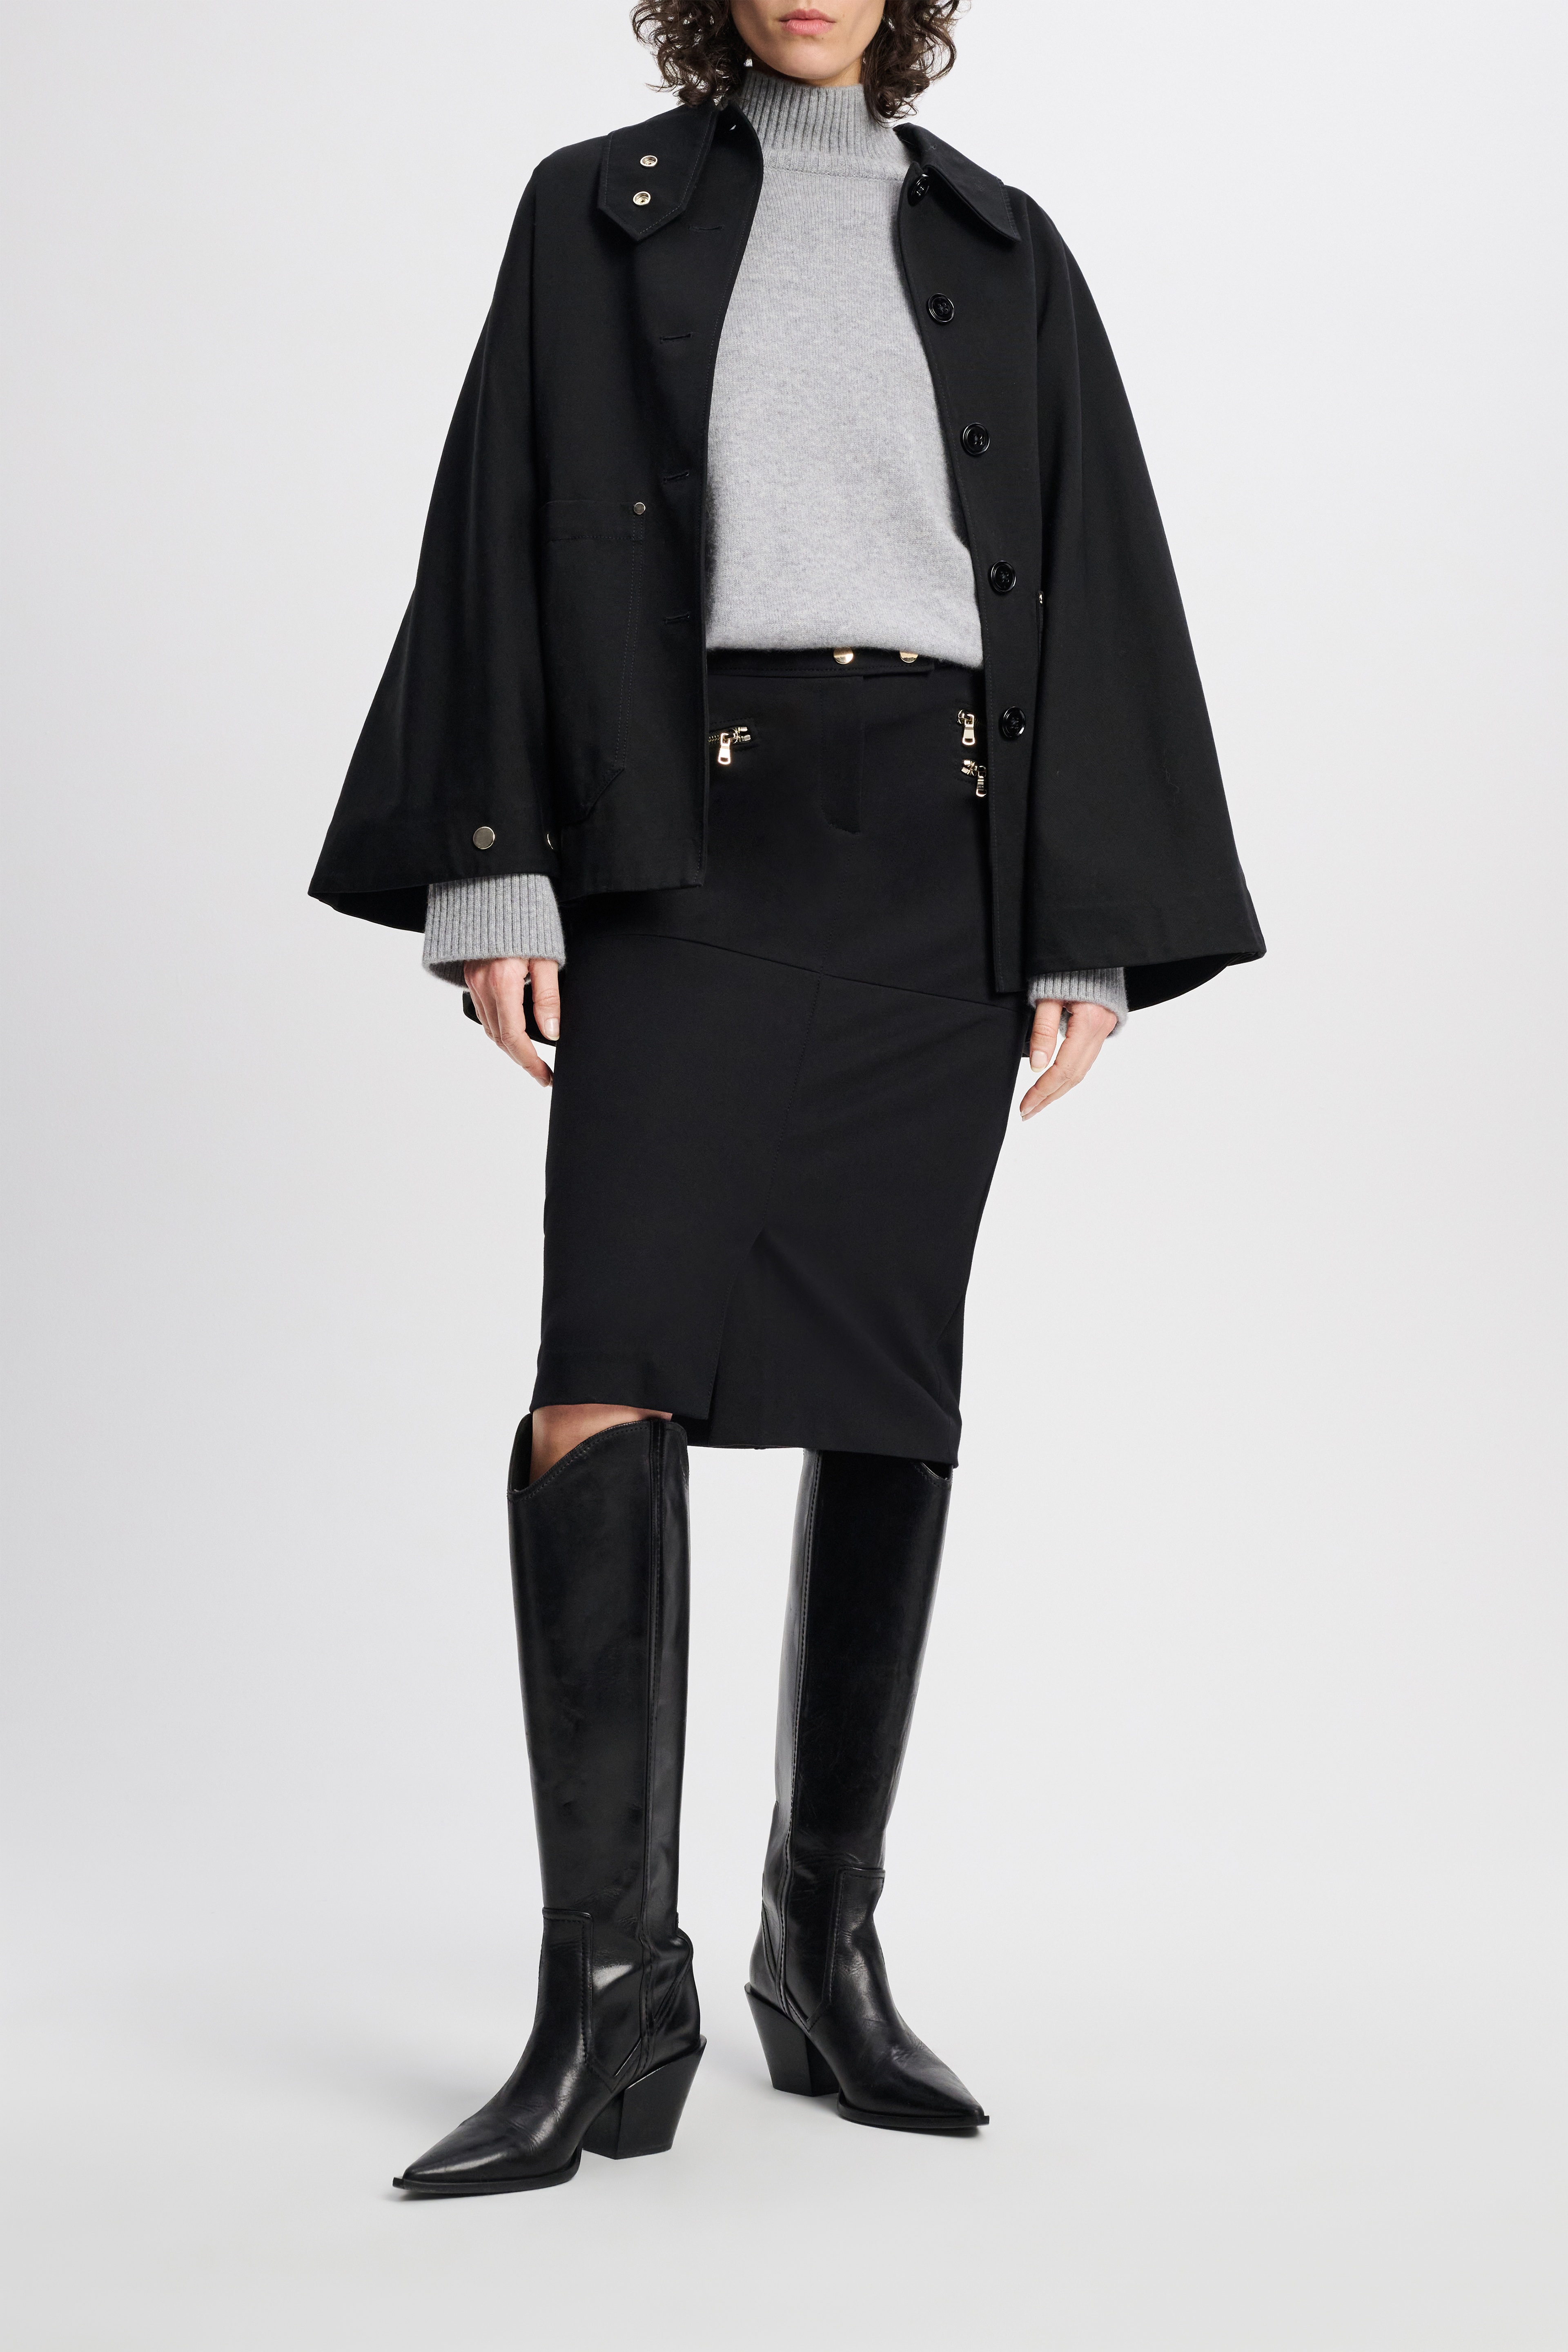 Dorothee Schumacher Punto Milano skirt with zipper